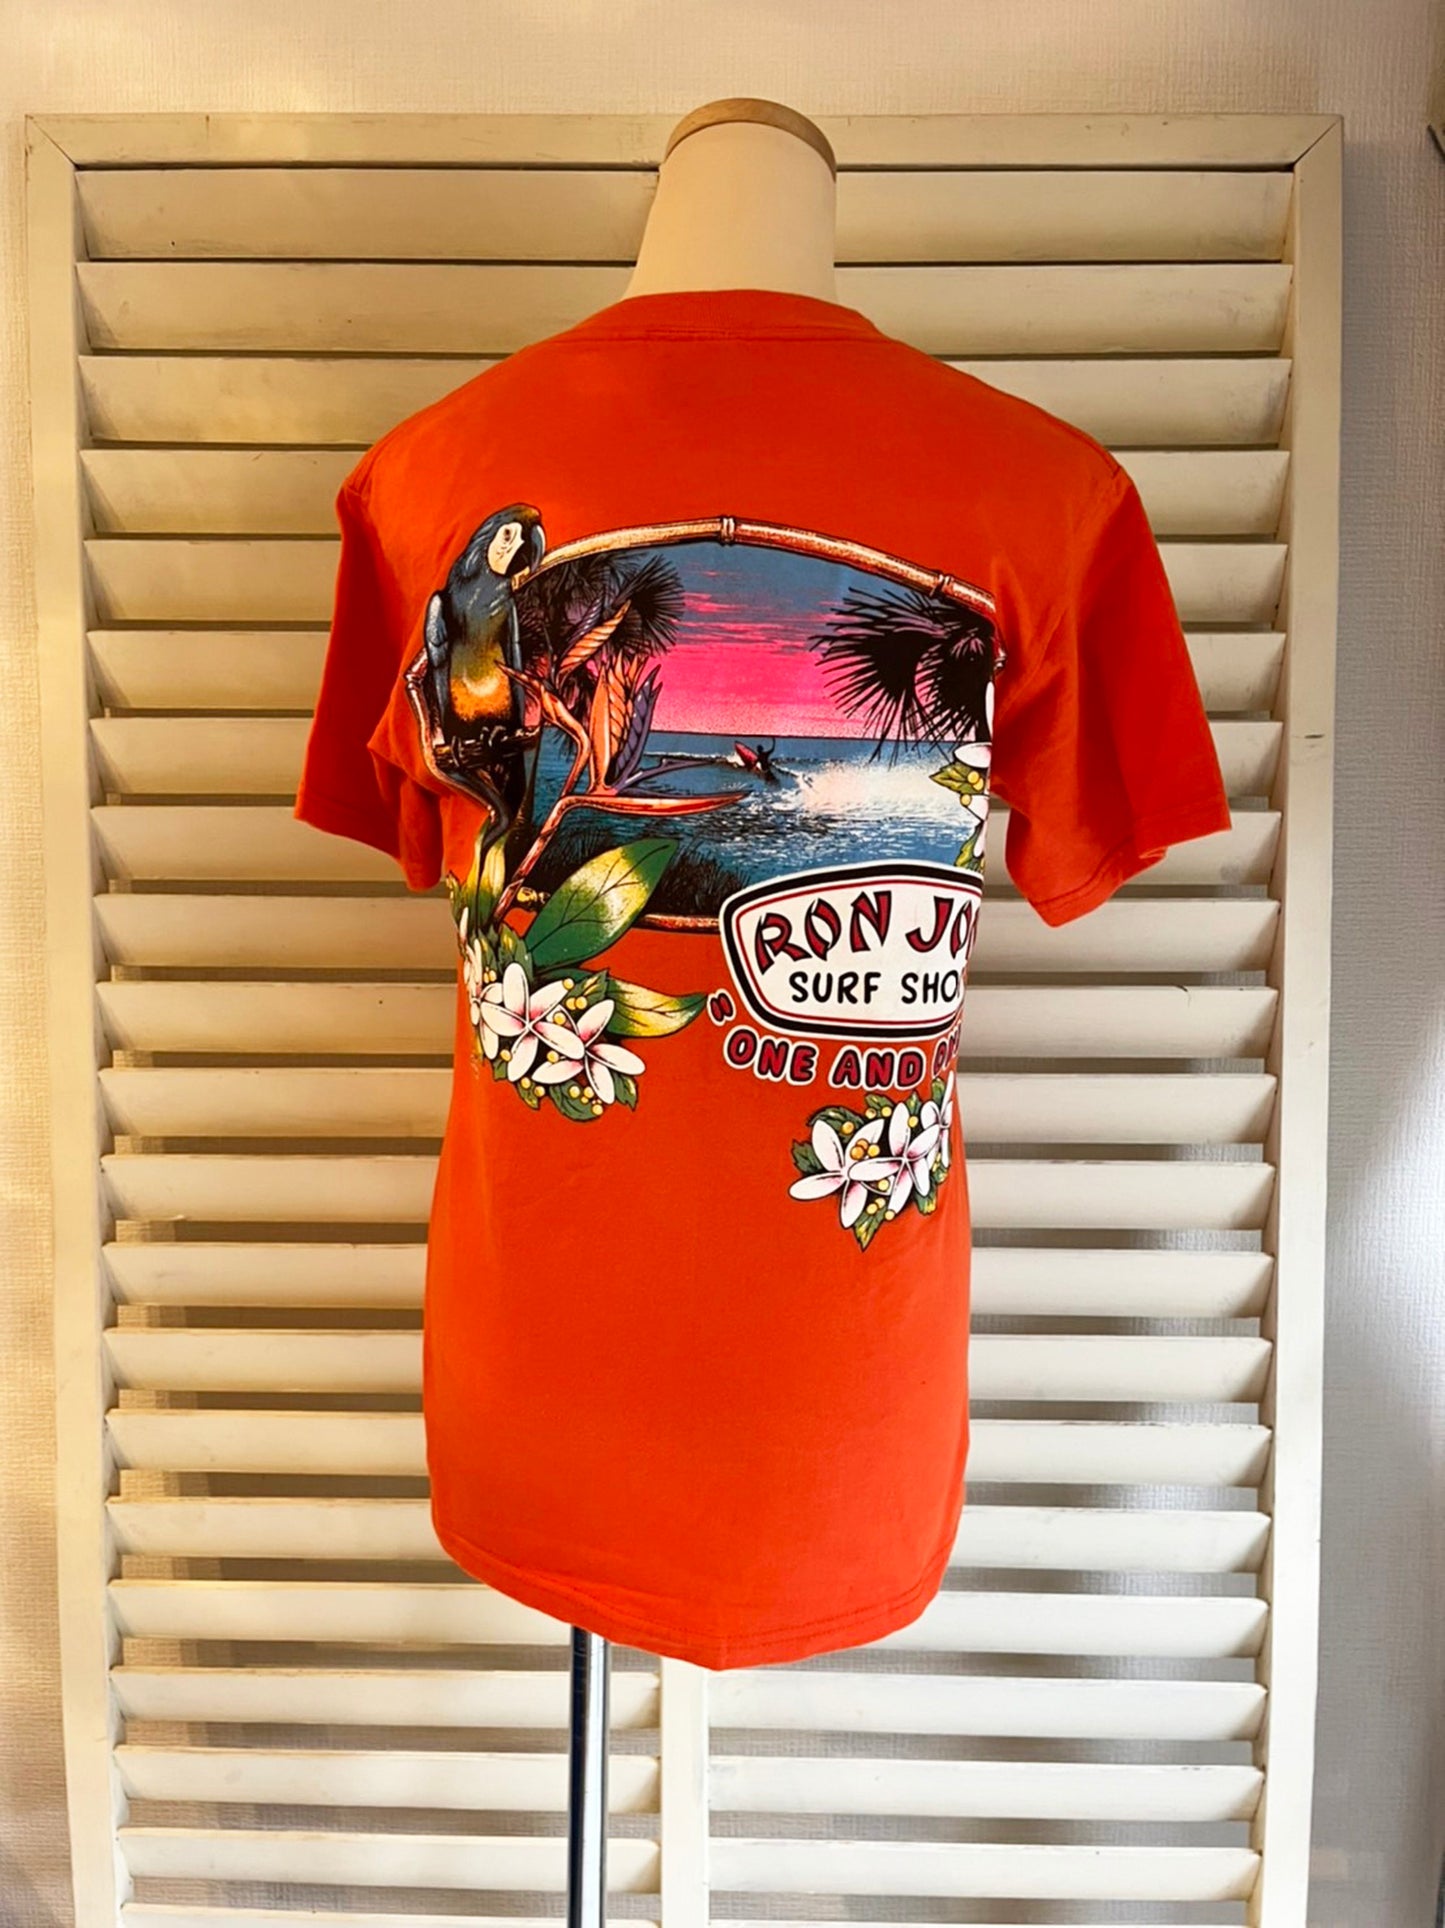 【RONJON SURF SHOP】ロンジョン paradise surf Tシャツ オレンジ (men's Sサイズ）